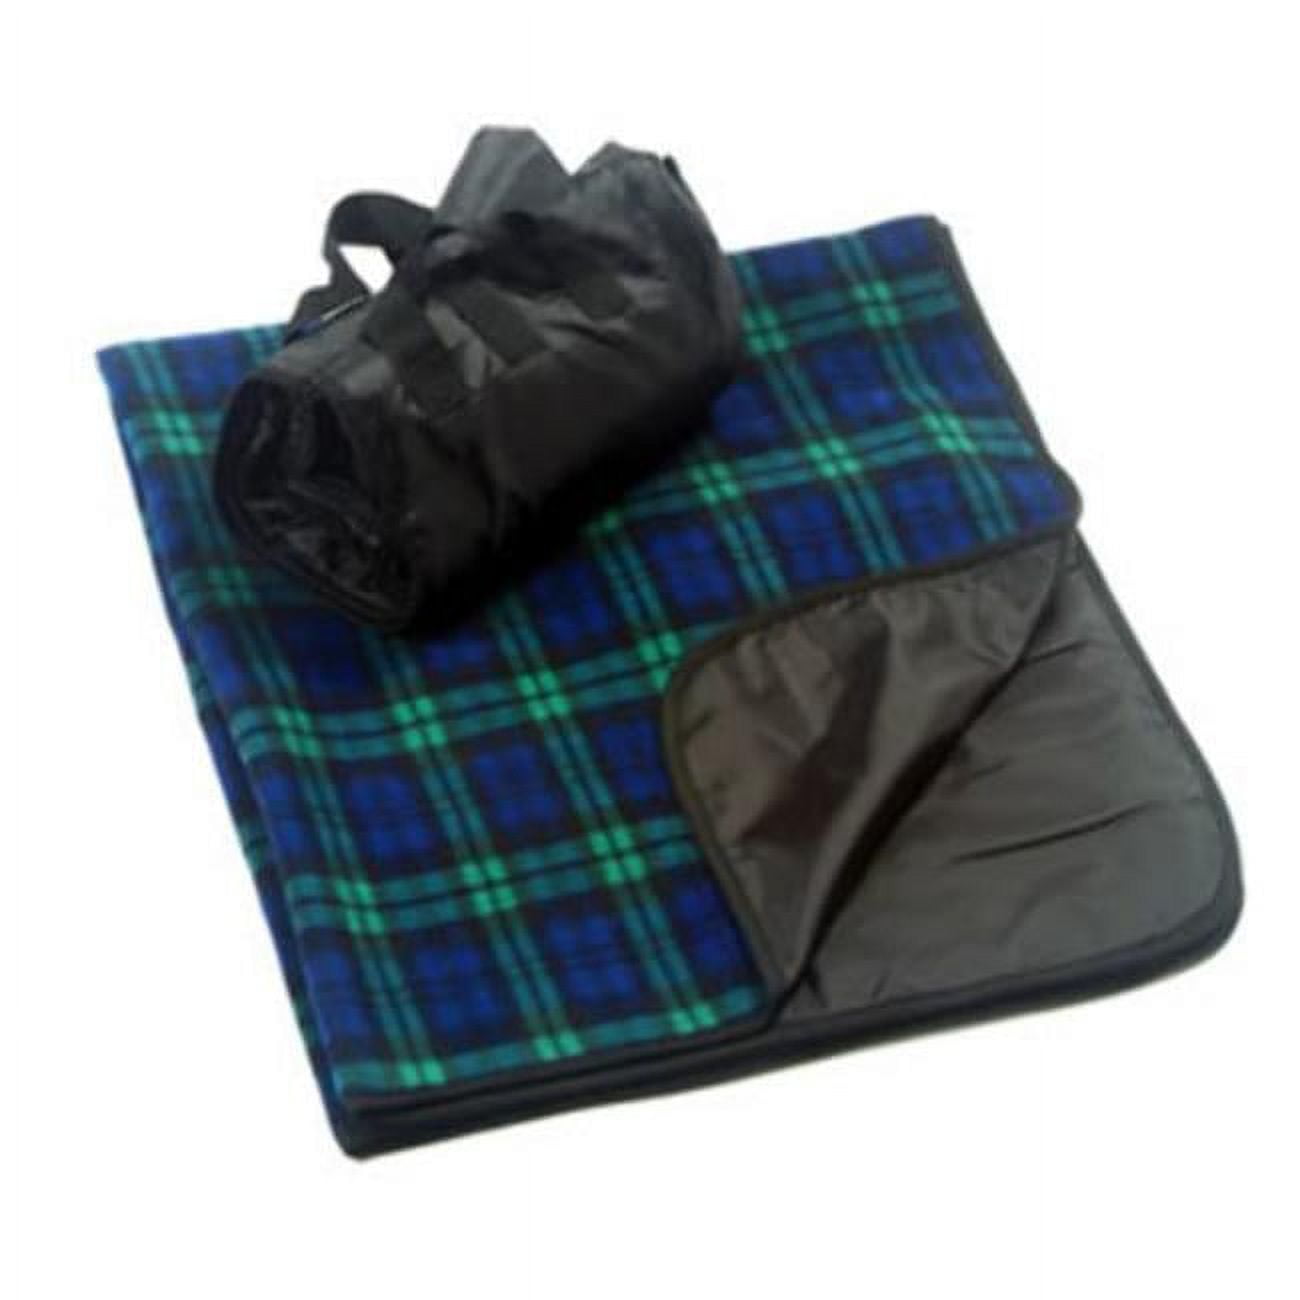 50 X 60 In. Waterproof Outdoor & Picnic Blankets, Blackwatch - Case Of 24